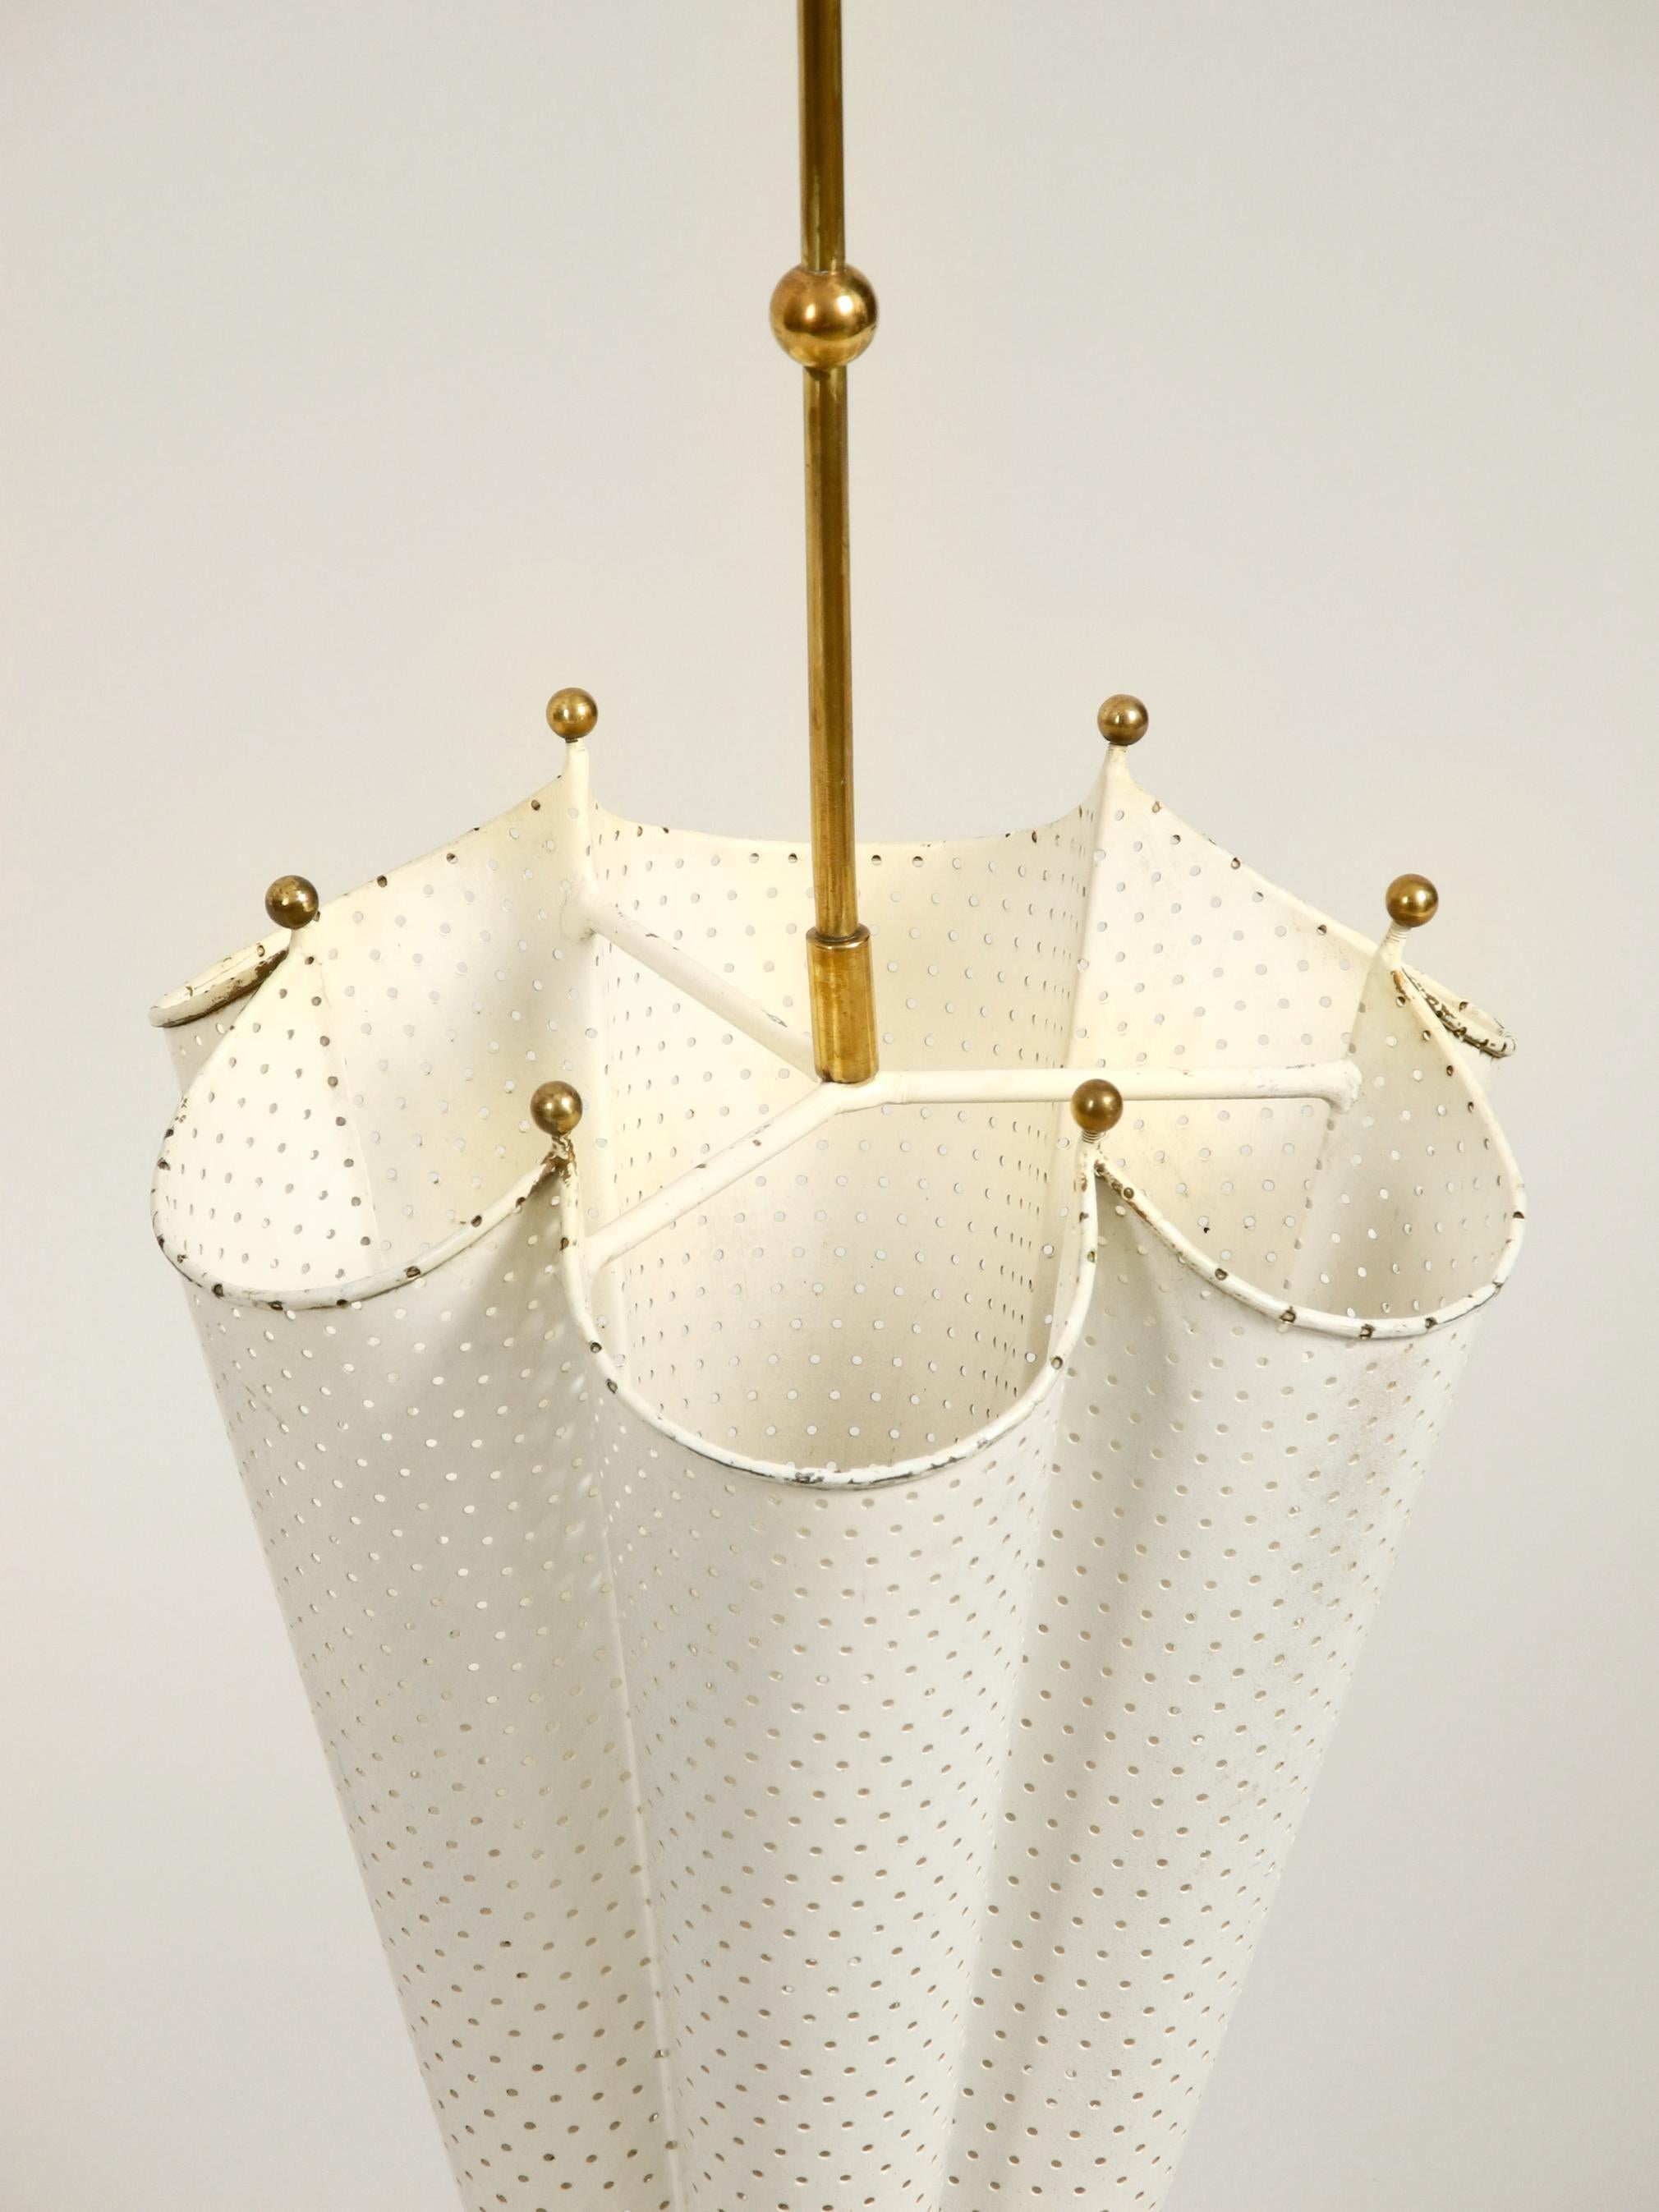 German Stunning Rare Midcentury Perforated Brass Umbrella Stand